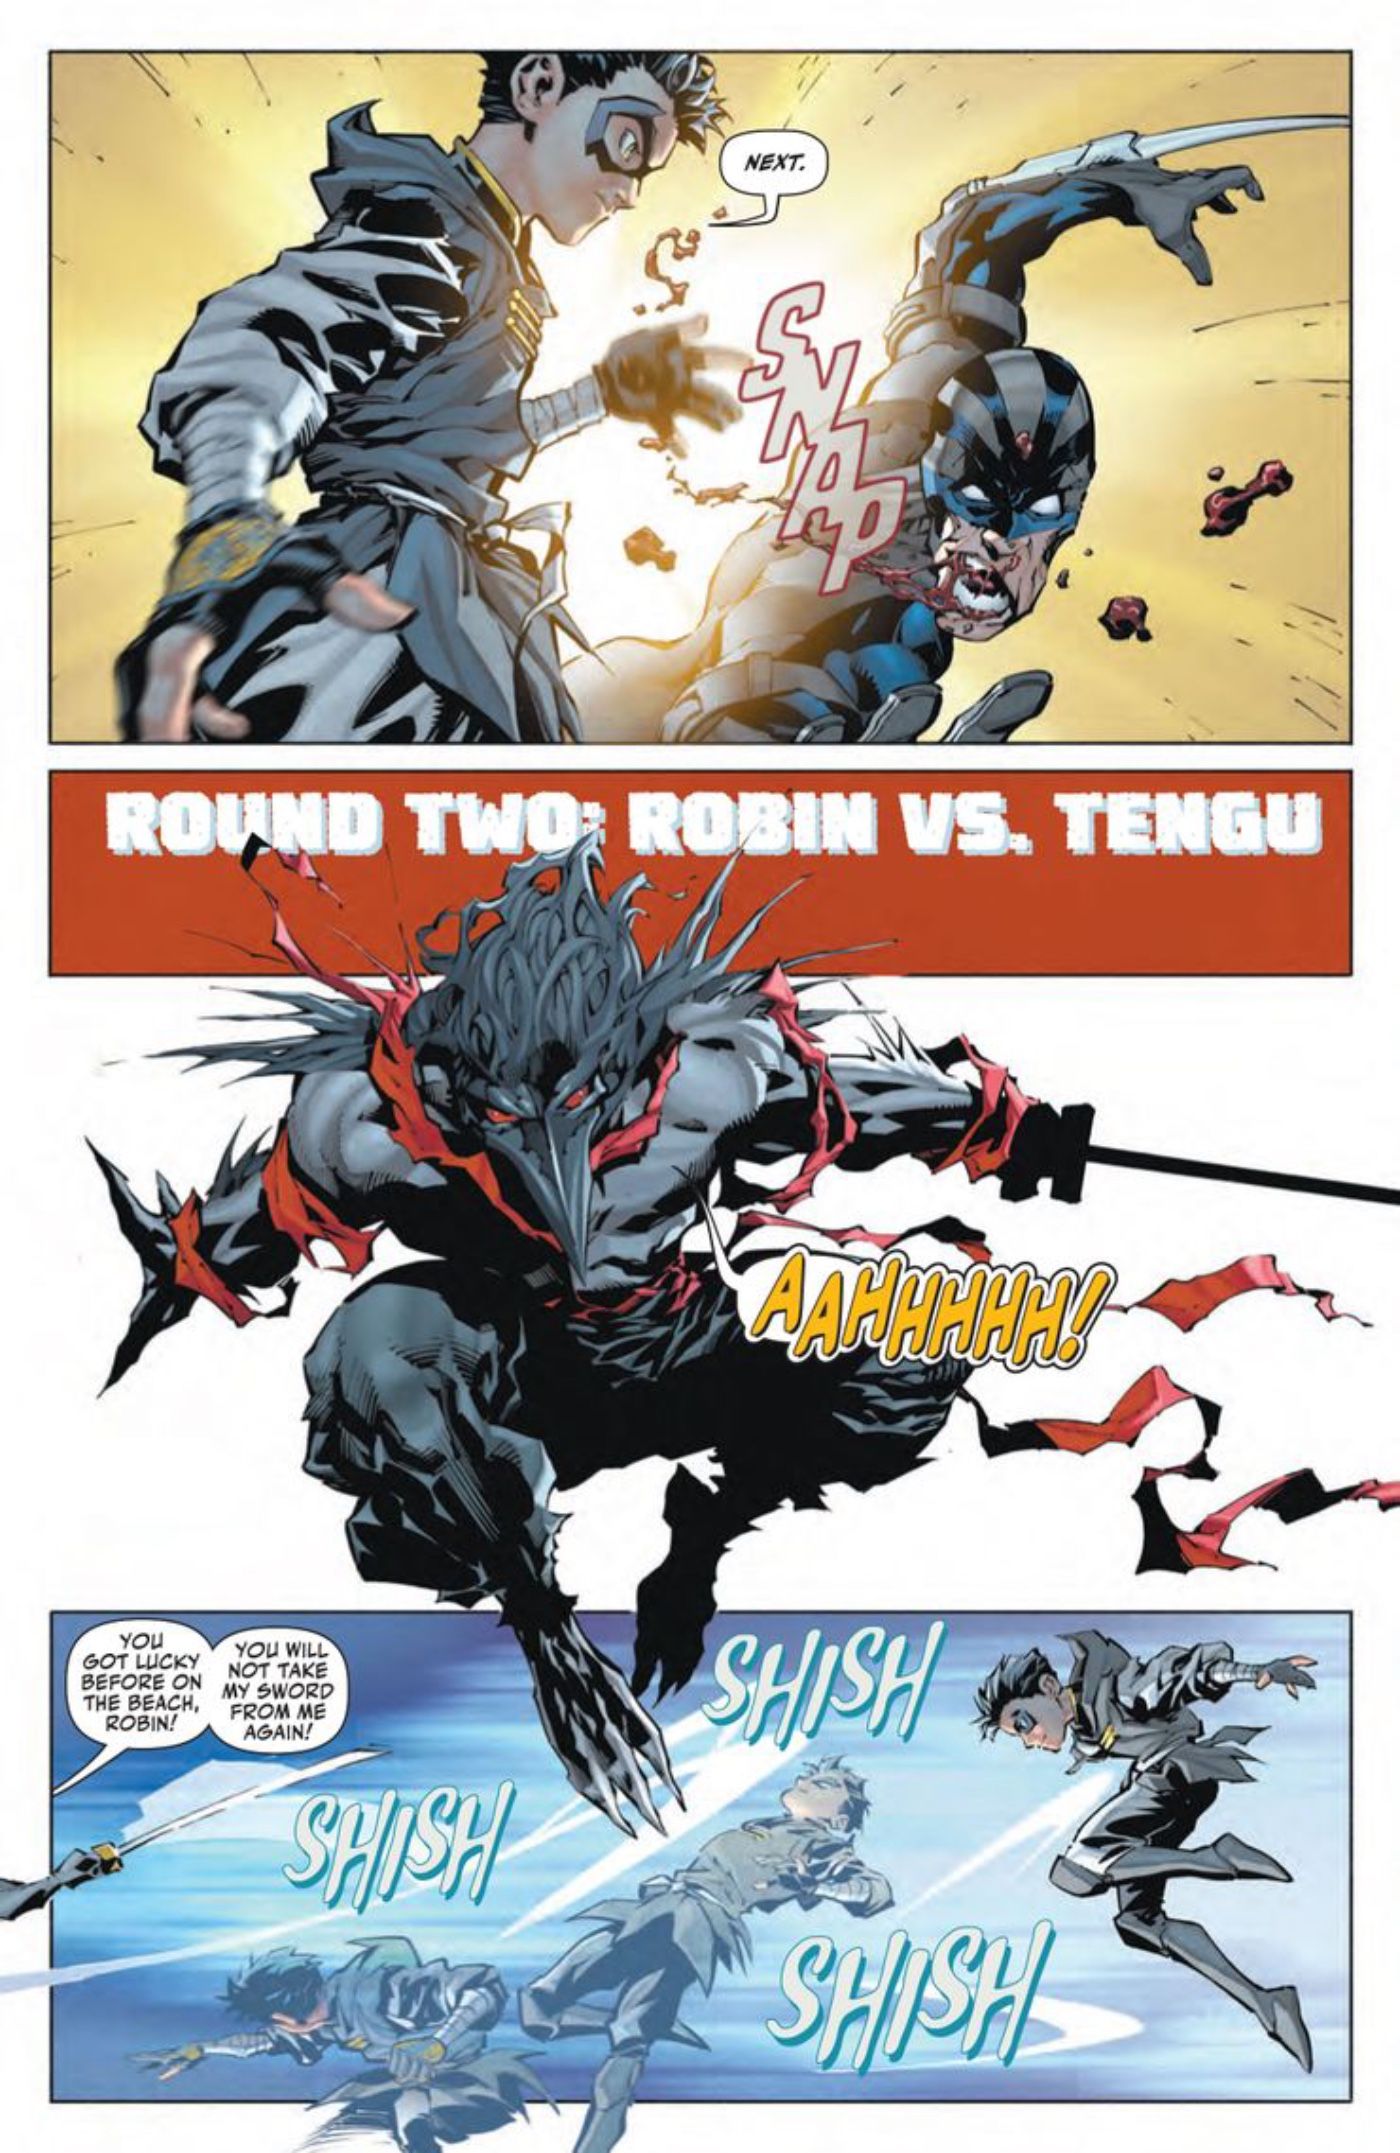 Robin fights the birdman Tengu